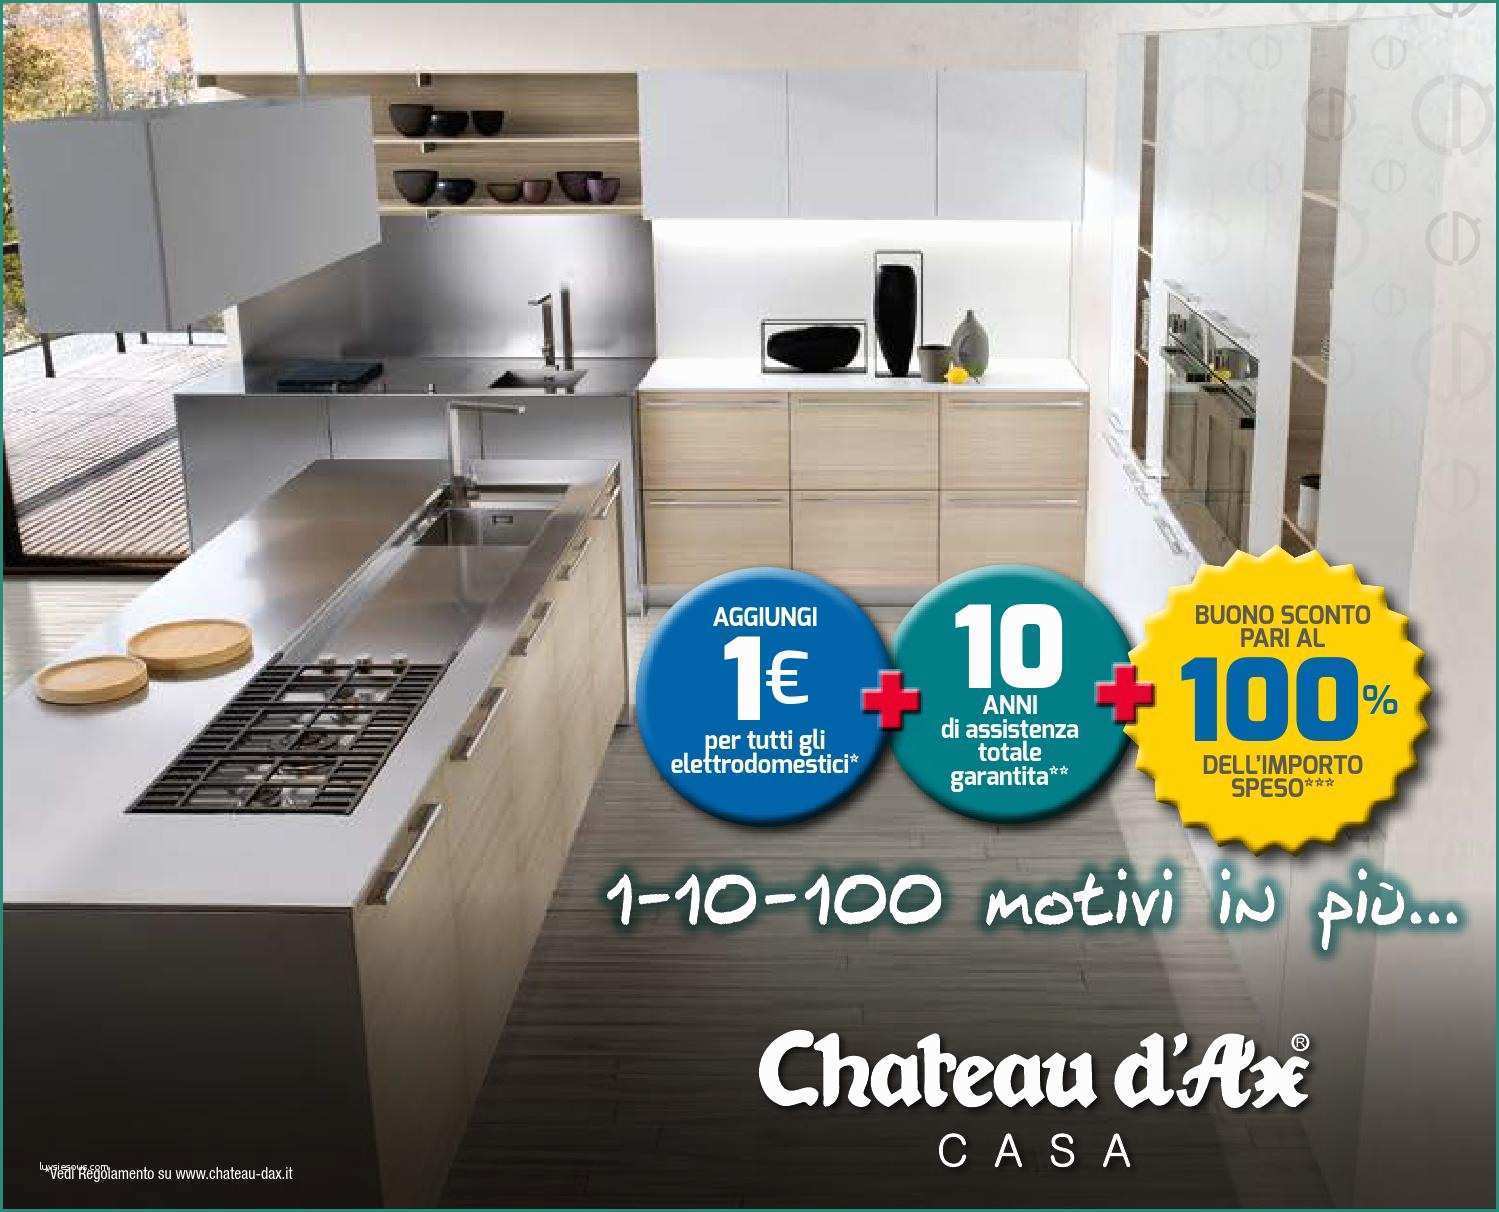 Cucine Chateau D Ax Prezzi E Chateau D Ax Depliant Cucine 2014 by Mobilpro issuu